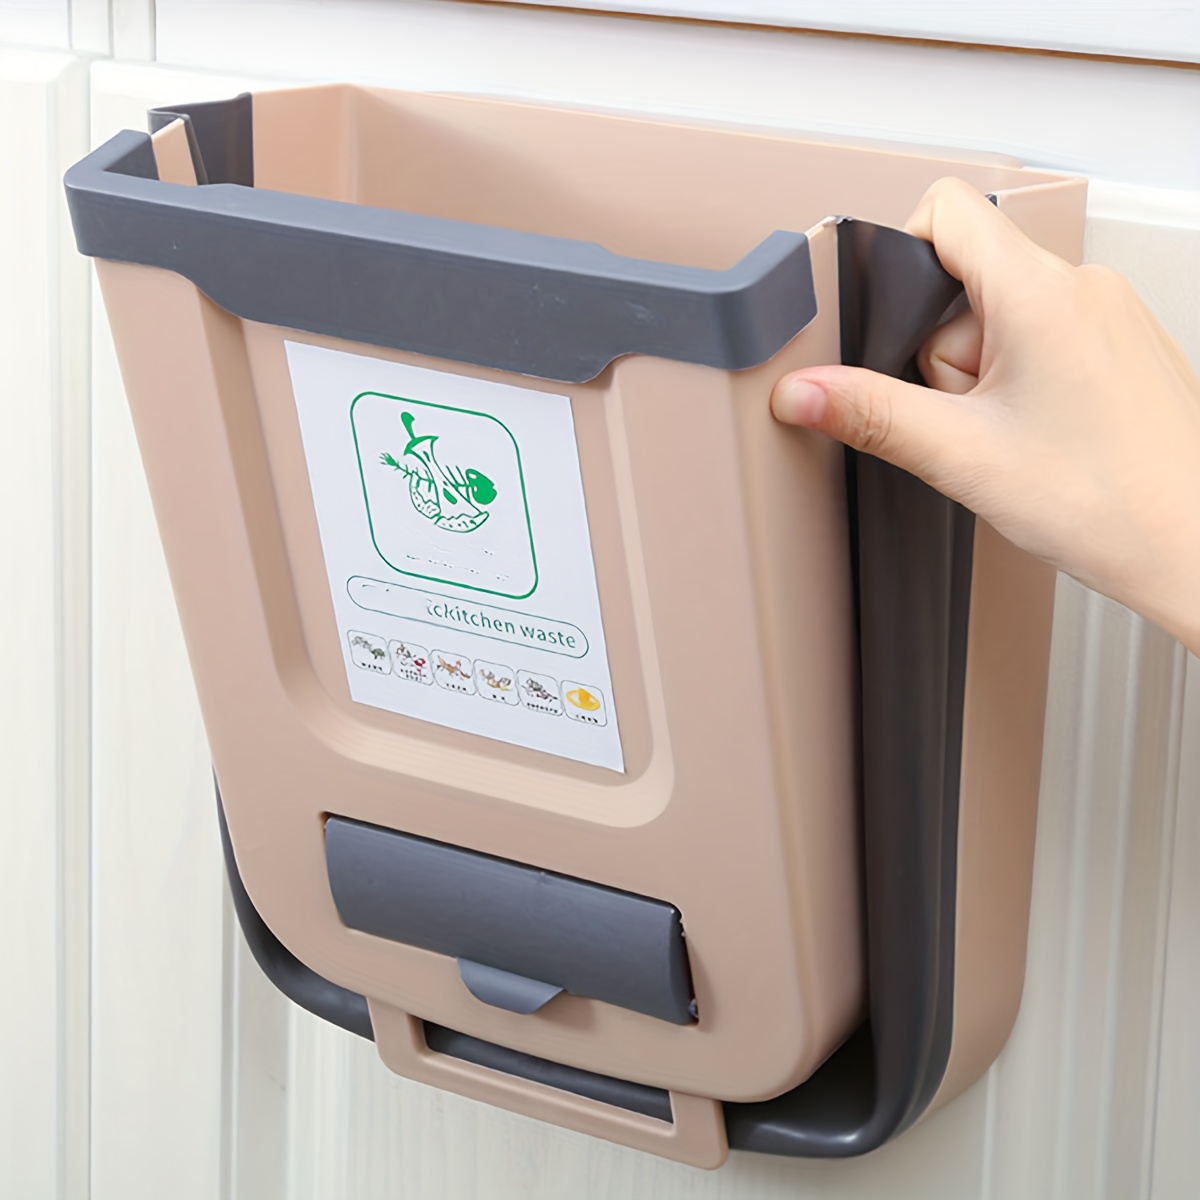 Foldable Trash Wall mounted Kitchen Waste Bin Cabinet Door - Temu